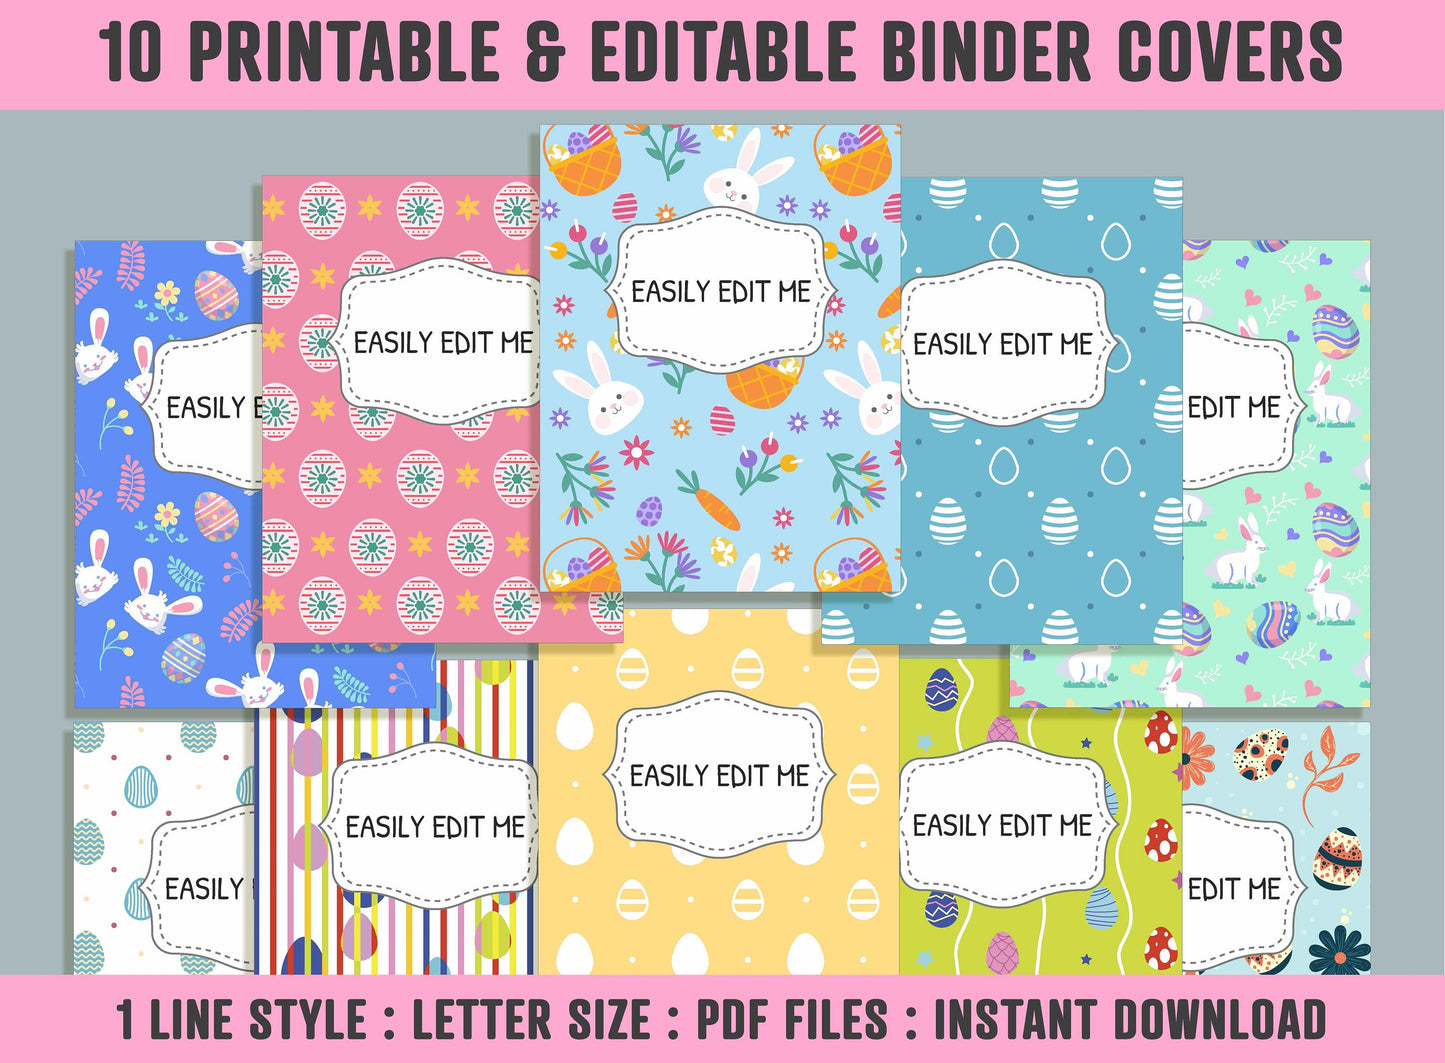 Easter Binder Cover, 10 Printable/Editable Binder Covers + Spines, Easter Eggs/Bunny Planner Template, Teacher/School Binder Label/Insert